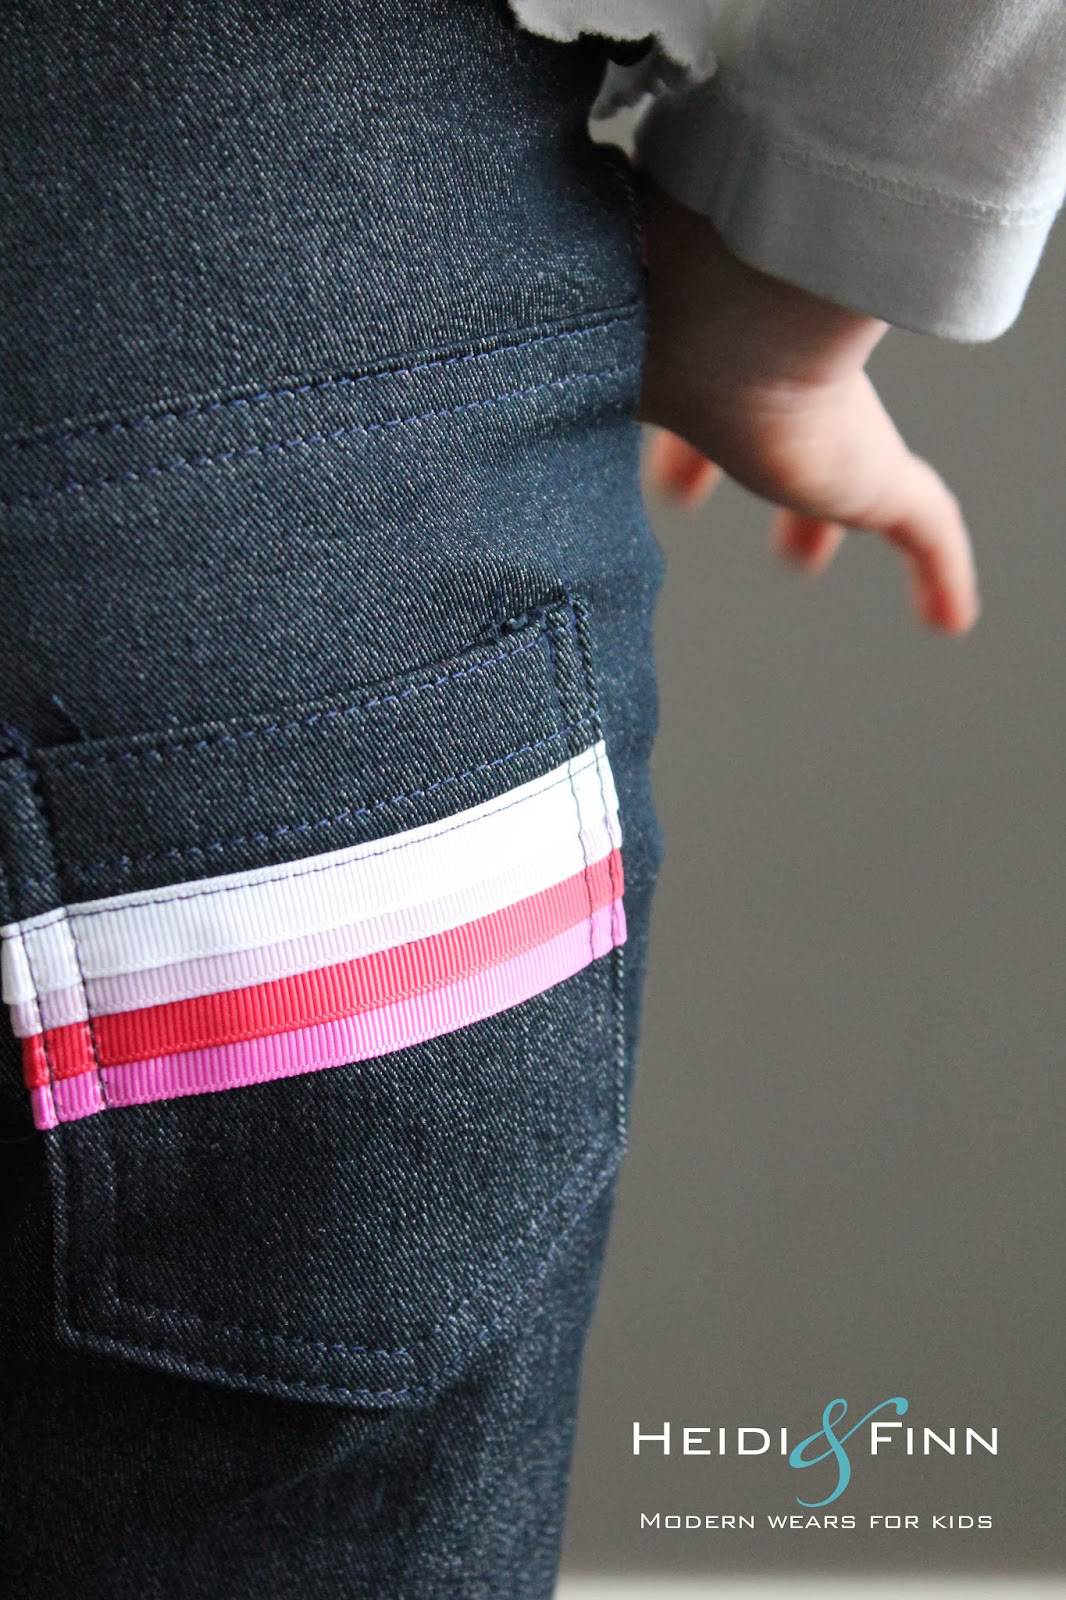 http://www.craftstorming.com/wp-content/uploads/2014/05/jeans-pocket.jpg